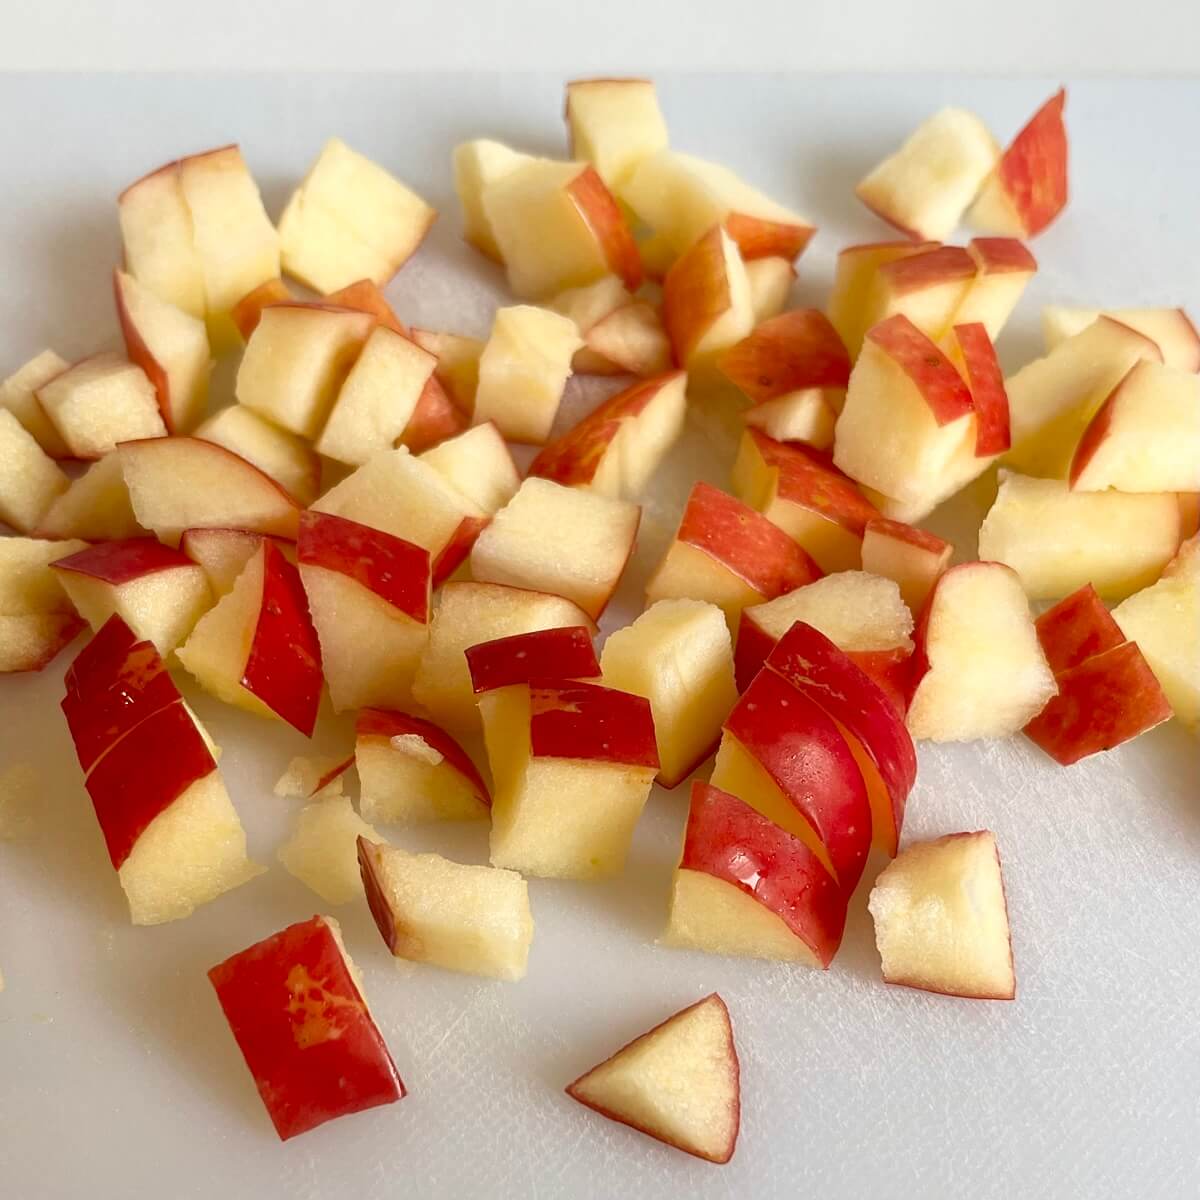 Chopped Honeycrisp apples on a white cutting board.